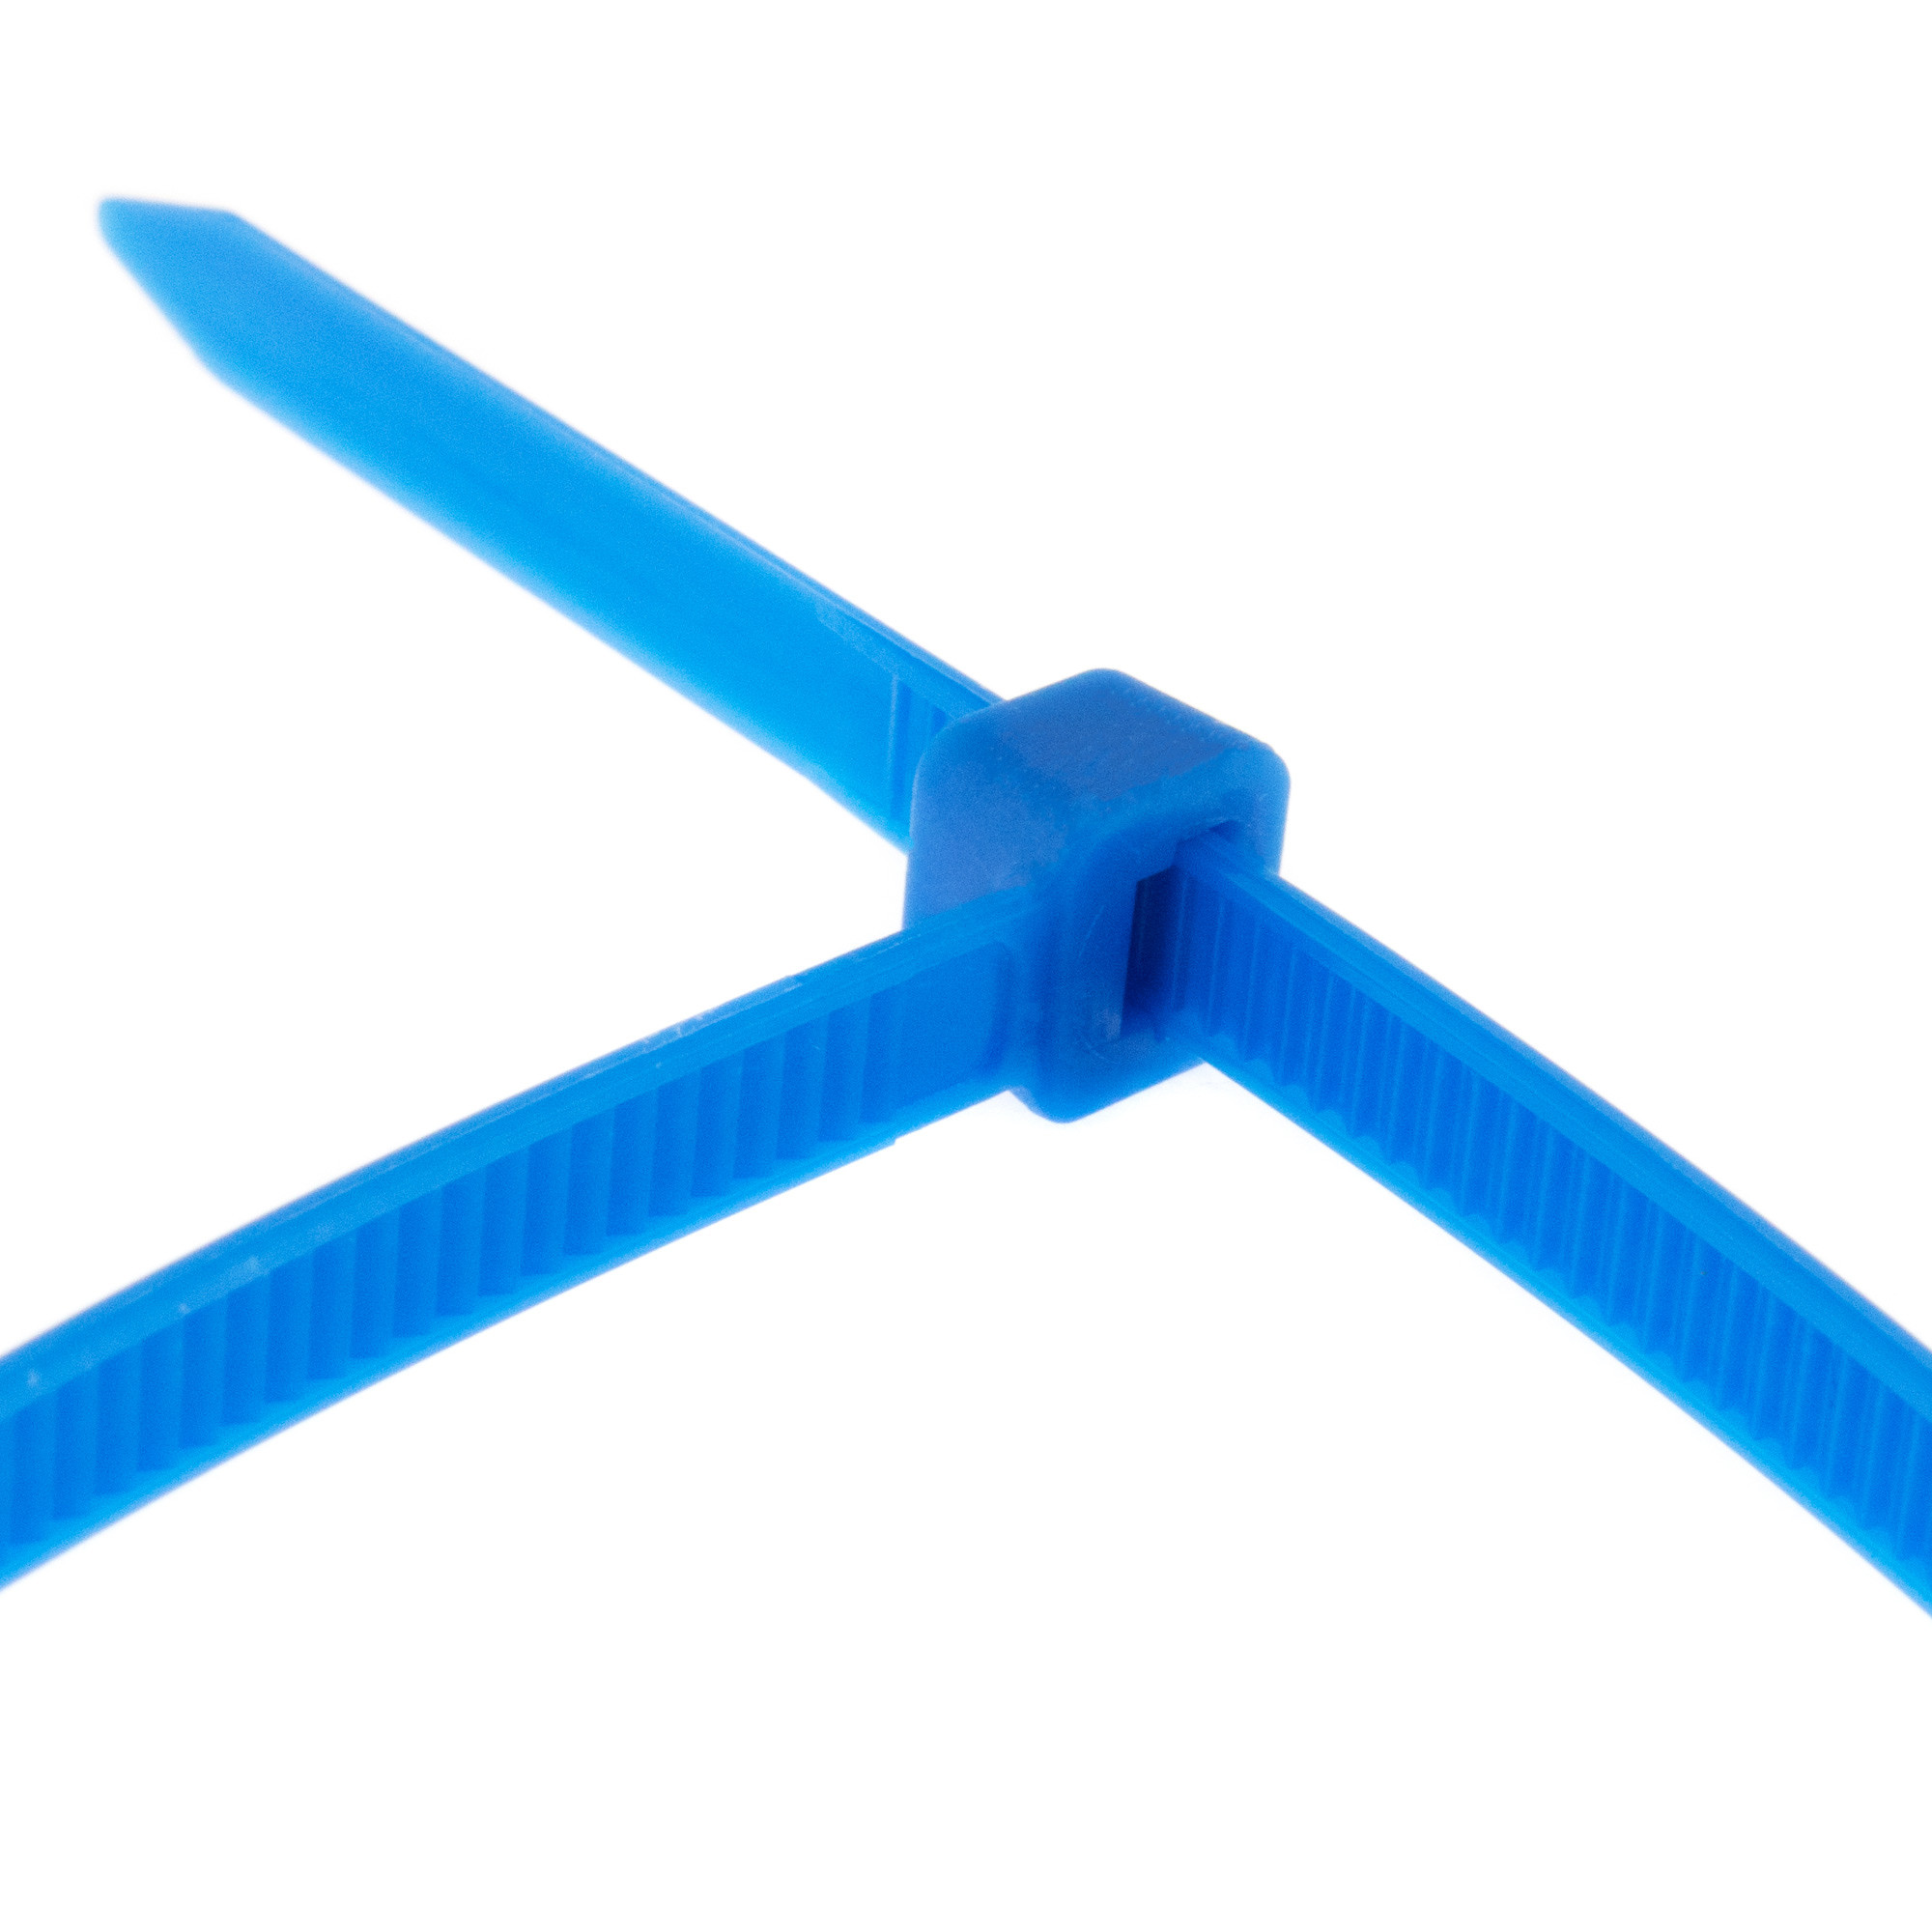 Cable tie self-locking 150 x 3,6mm, blue, 100PCS